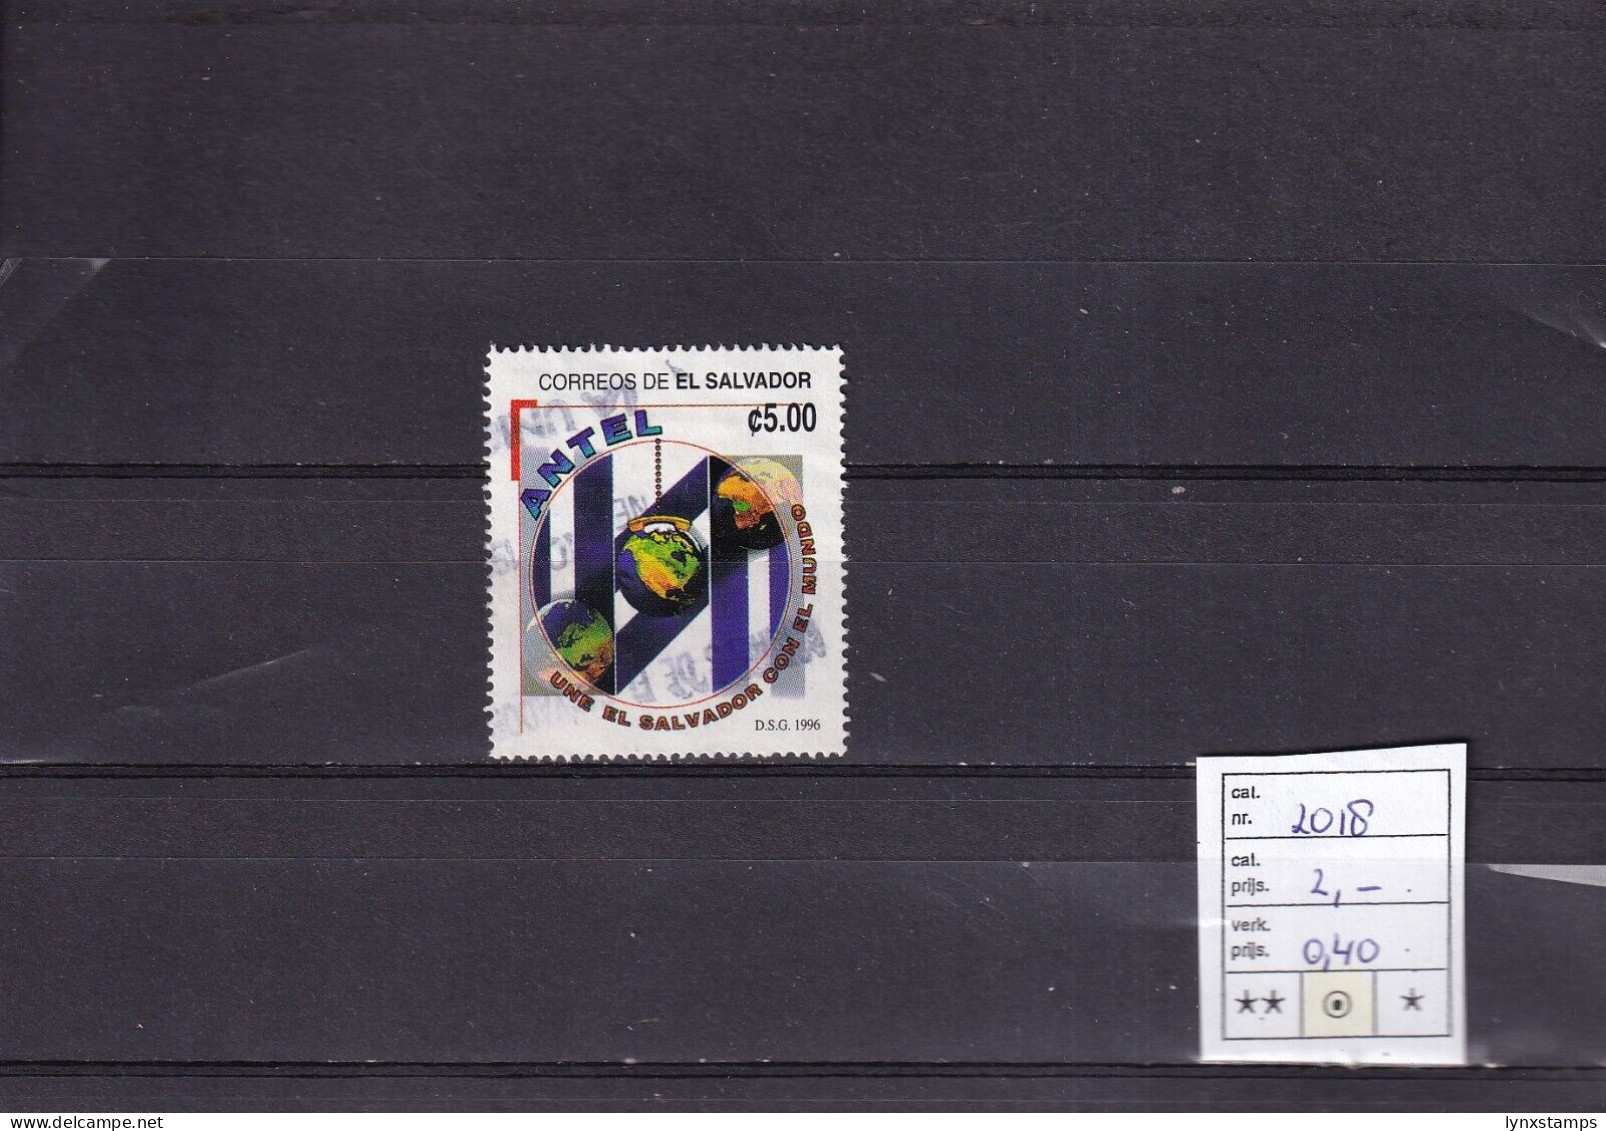 ER03 El Salvador 1996 Day Of The Telecommunications Worker - Used Stamp - Salvador